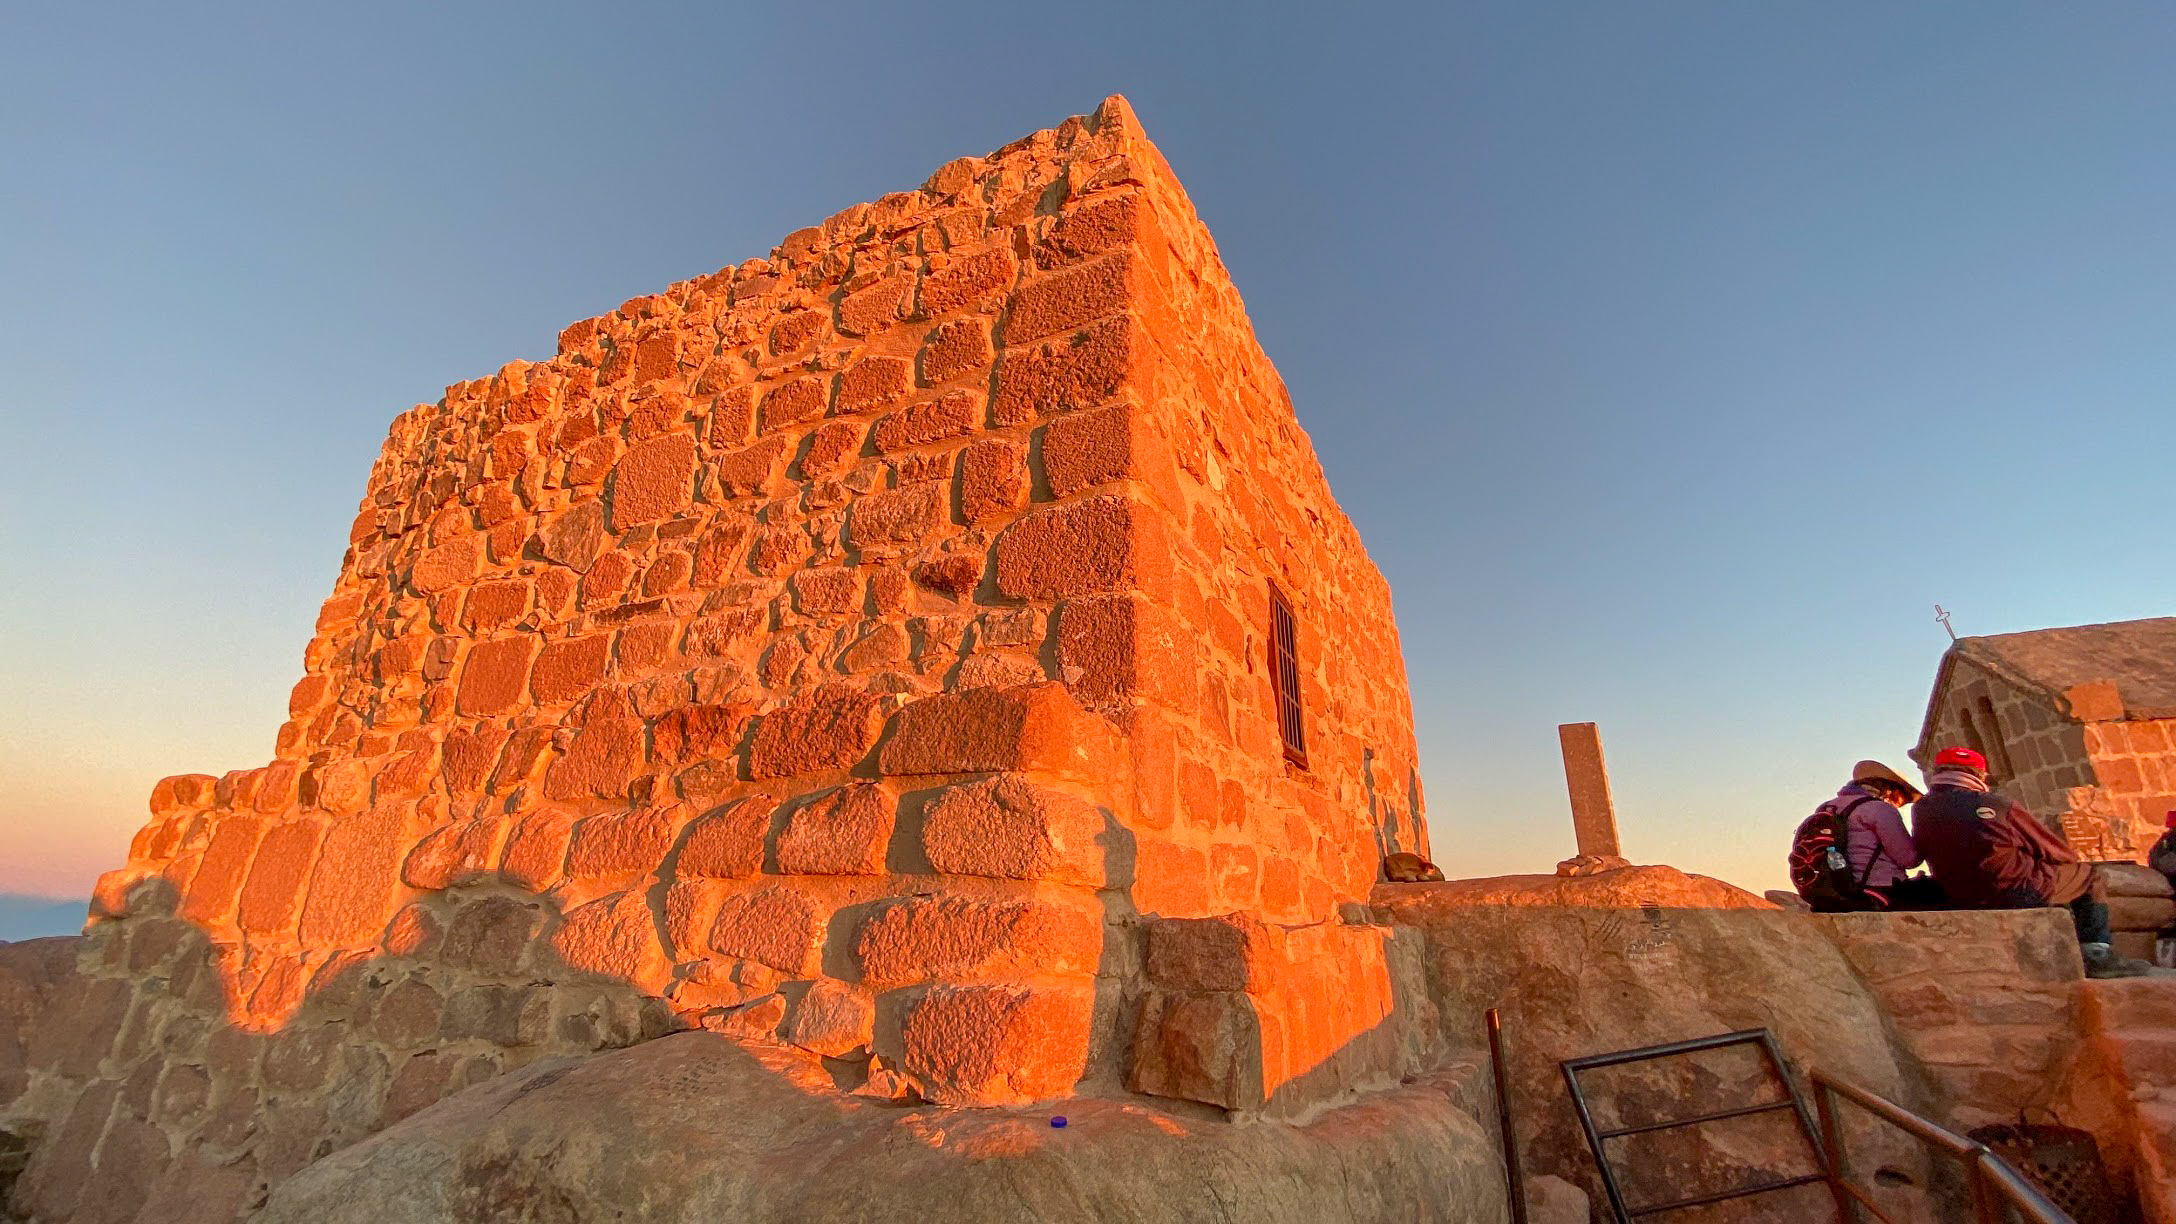 The orange glow of sunrise on a brick wall at the summit of Mount Sinai, Egypt